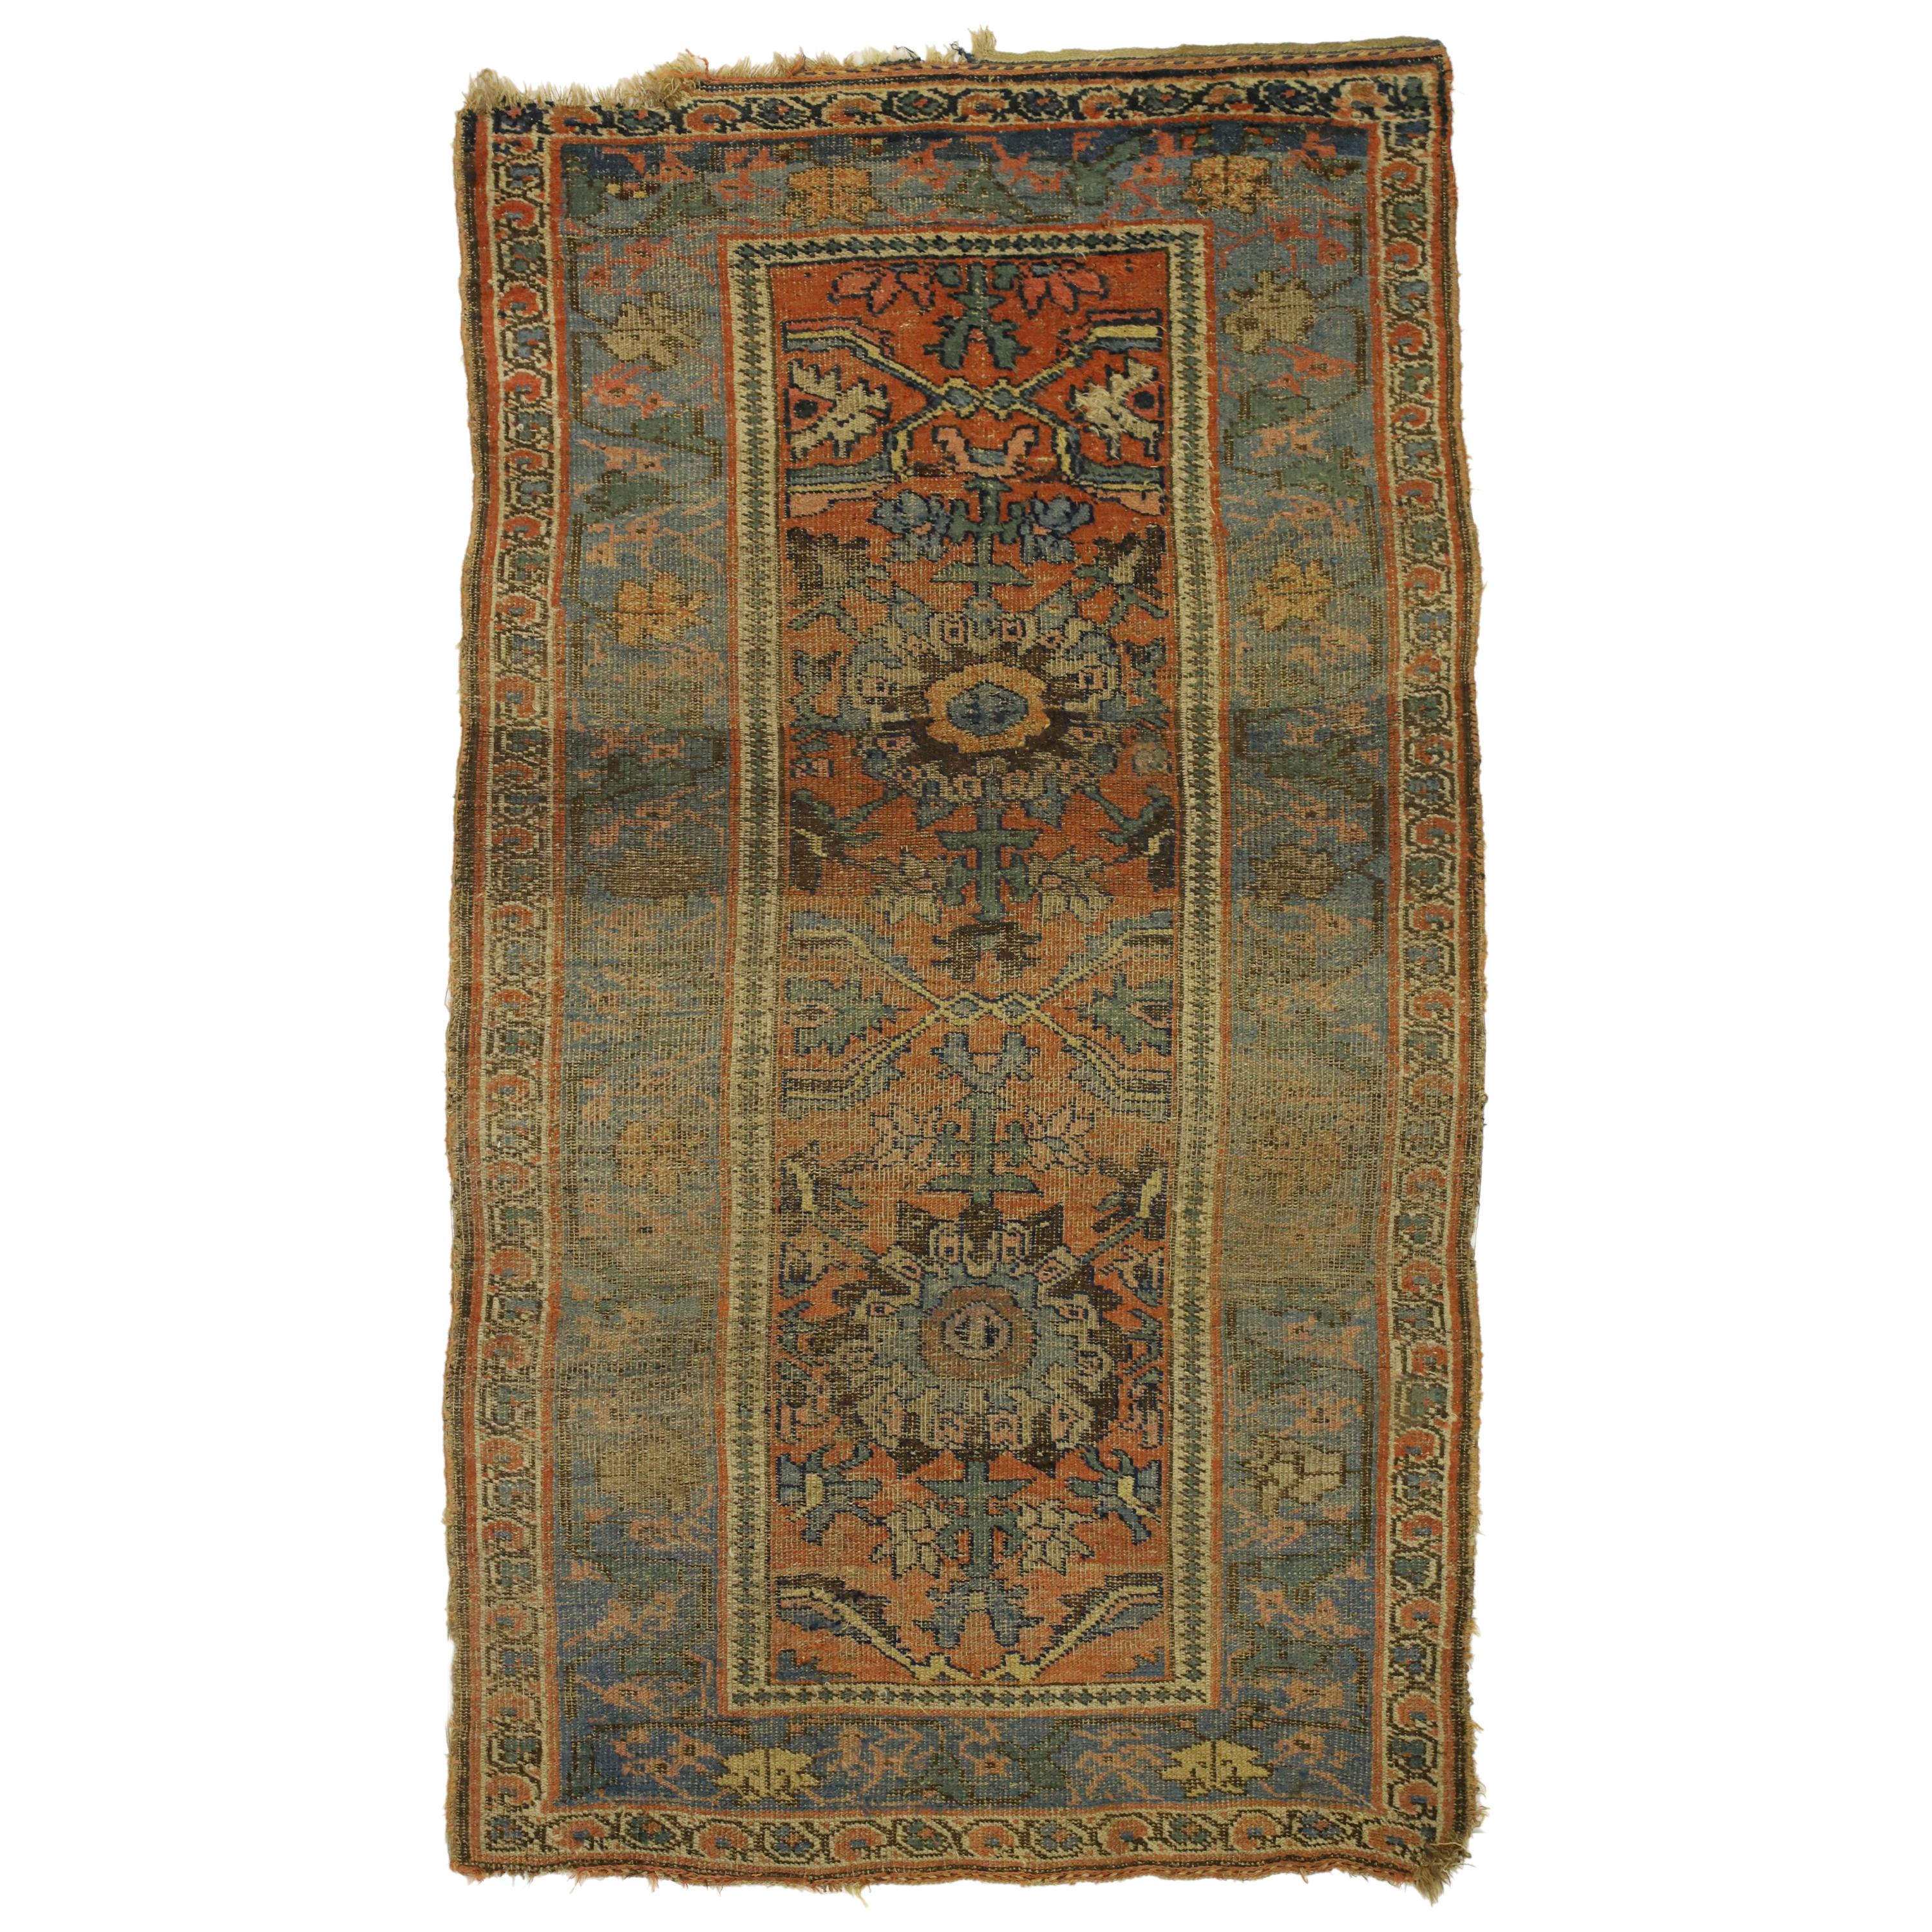 Distressed Antique Persian Bijar Rug with Rustic Belgian Arts & Crafts Style